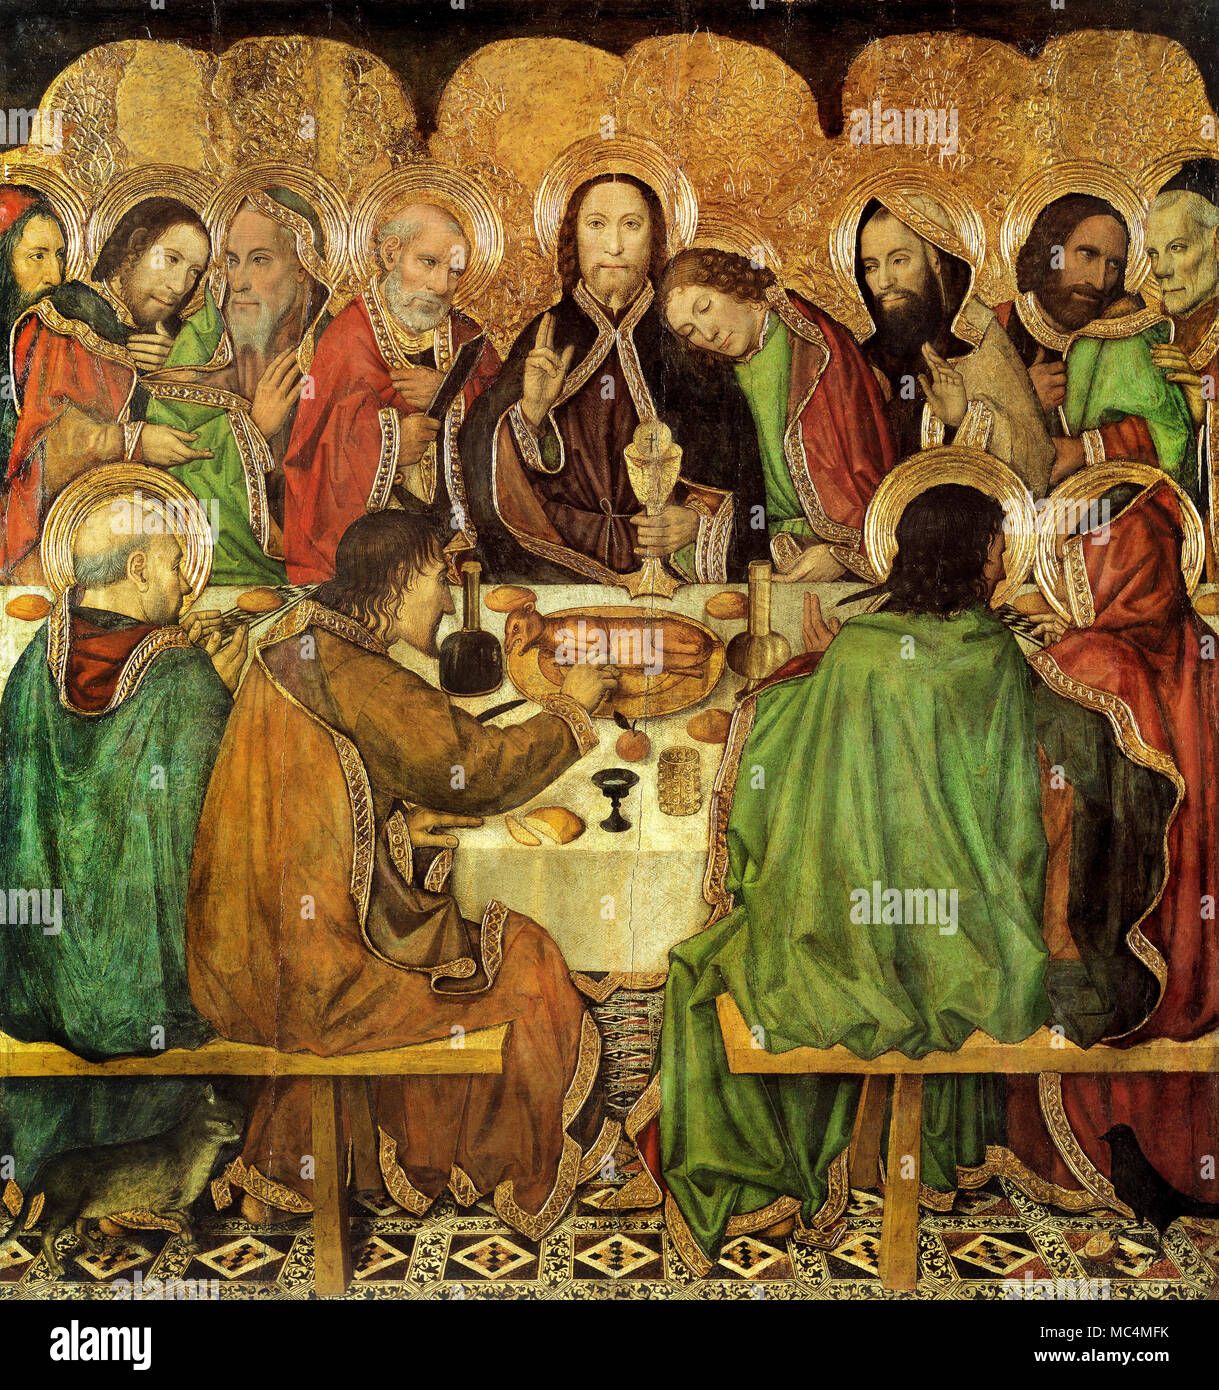 Jaume Huguet, Last Supper, Circa 1470, Oil on panel, Museu Nacional d'Art de Catalunya, Barcelona, Spain. Stock Photo